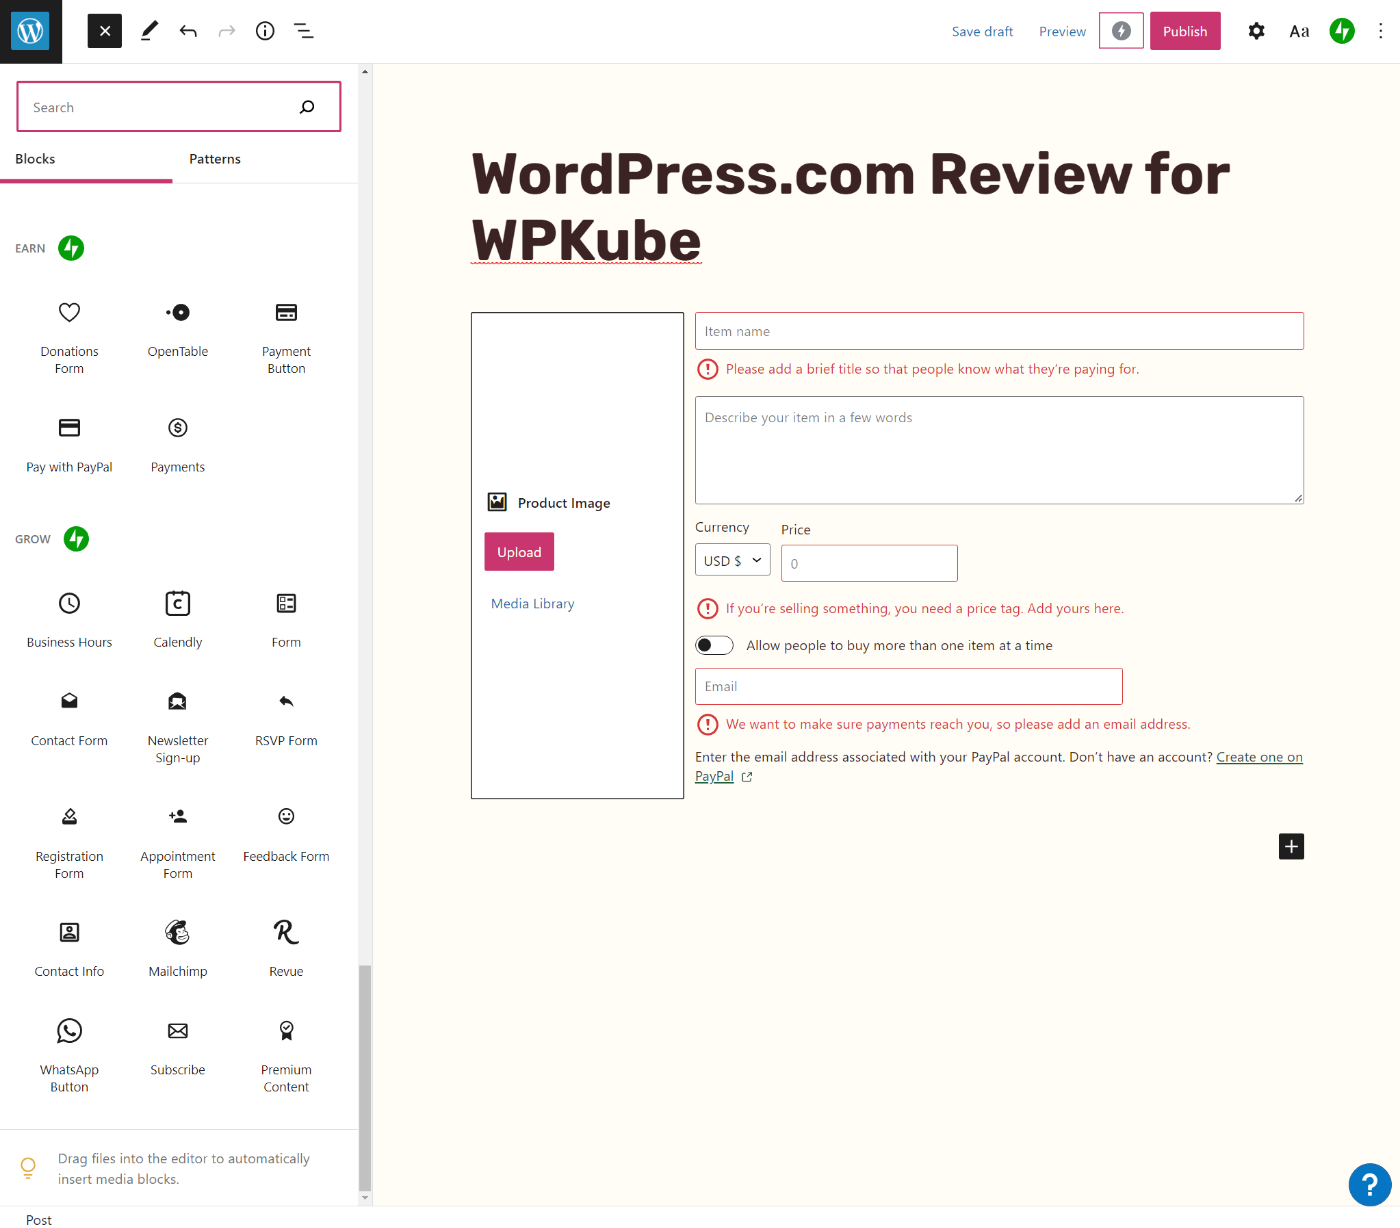 WordPress.com editor enhancements